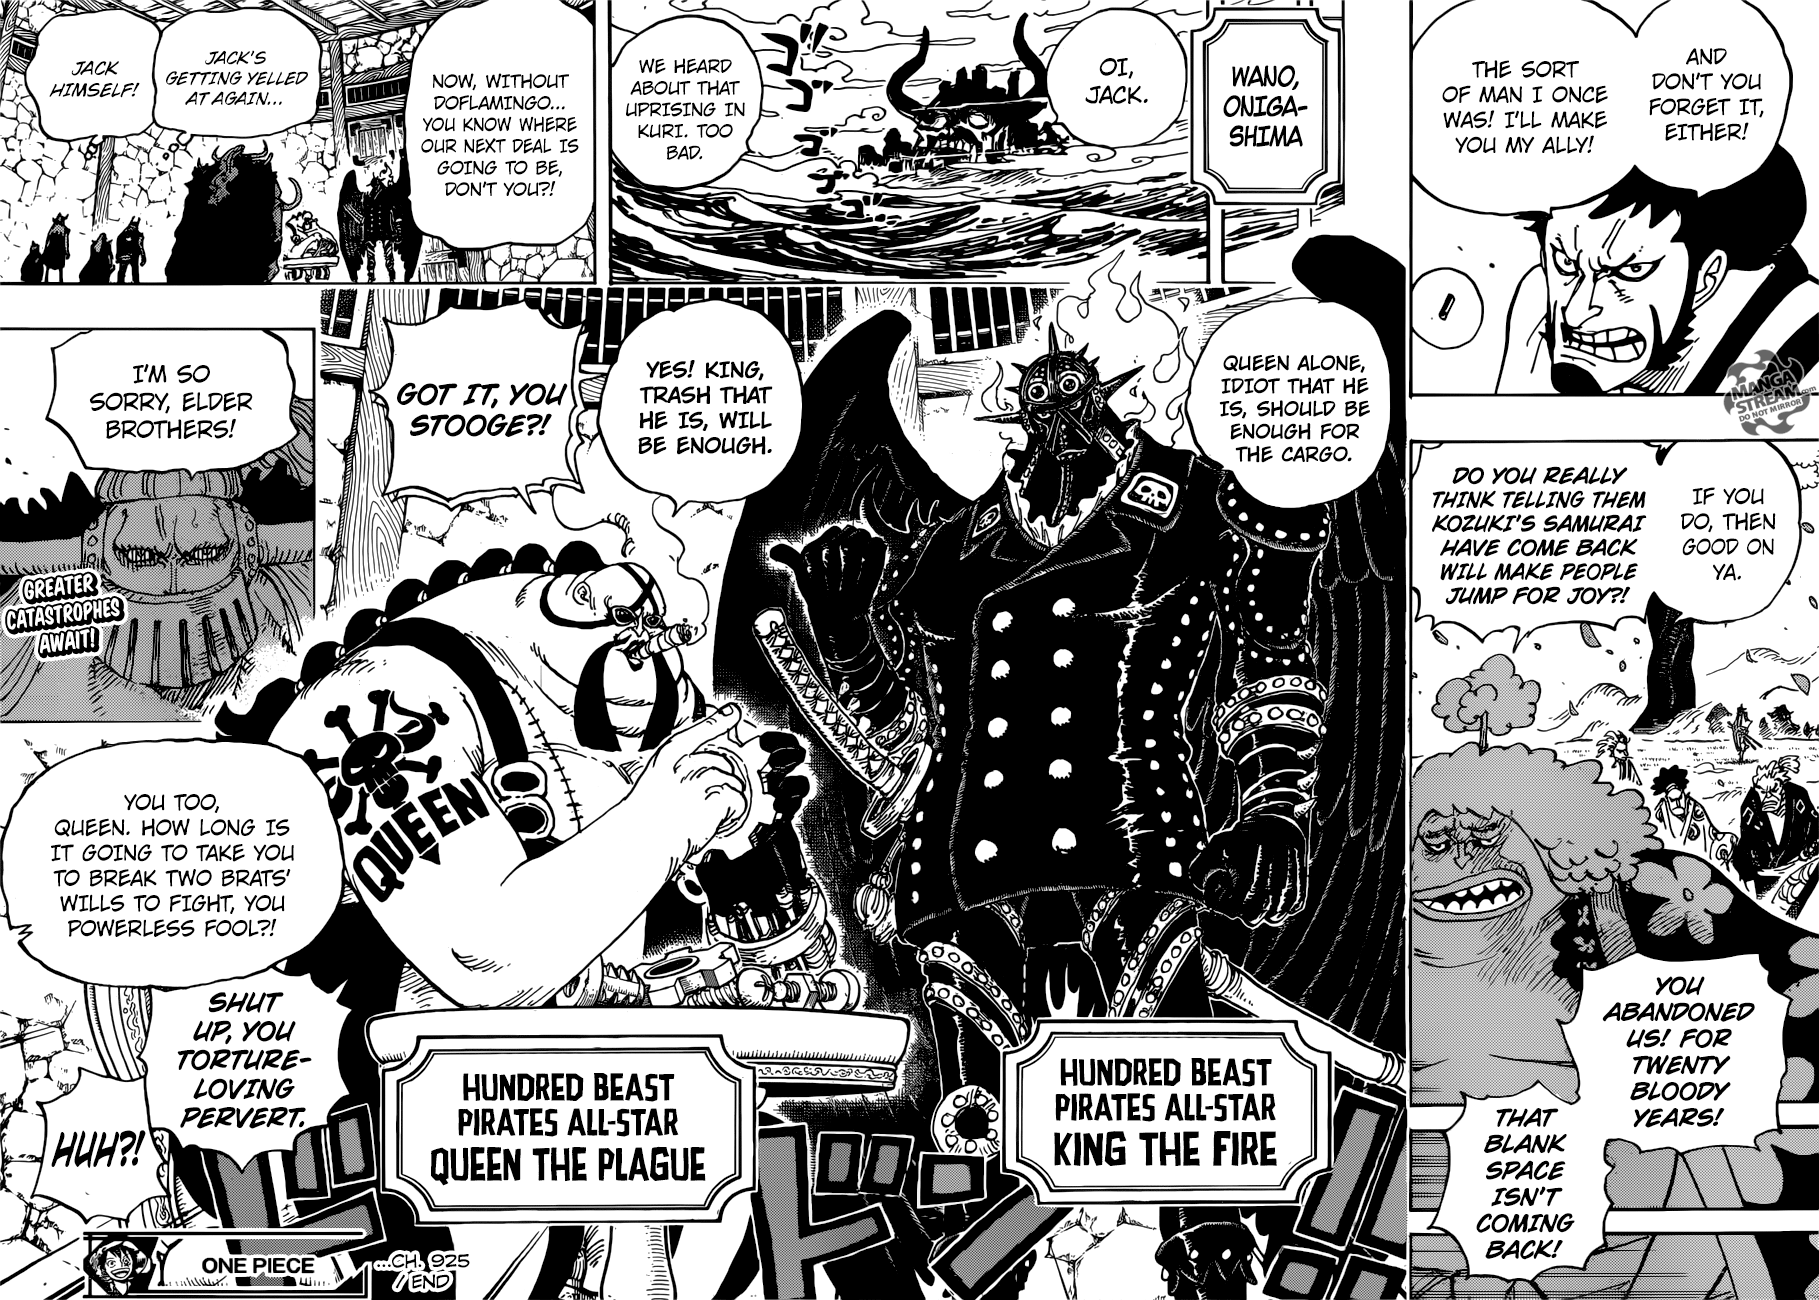 One Piece Chapter 925 Review Blank Otaku Orbit